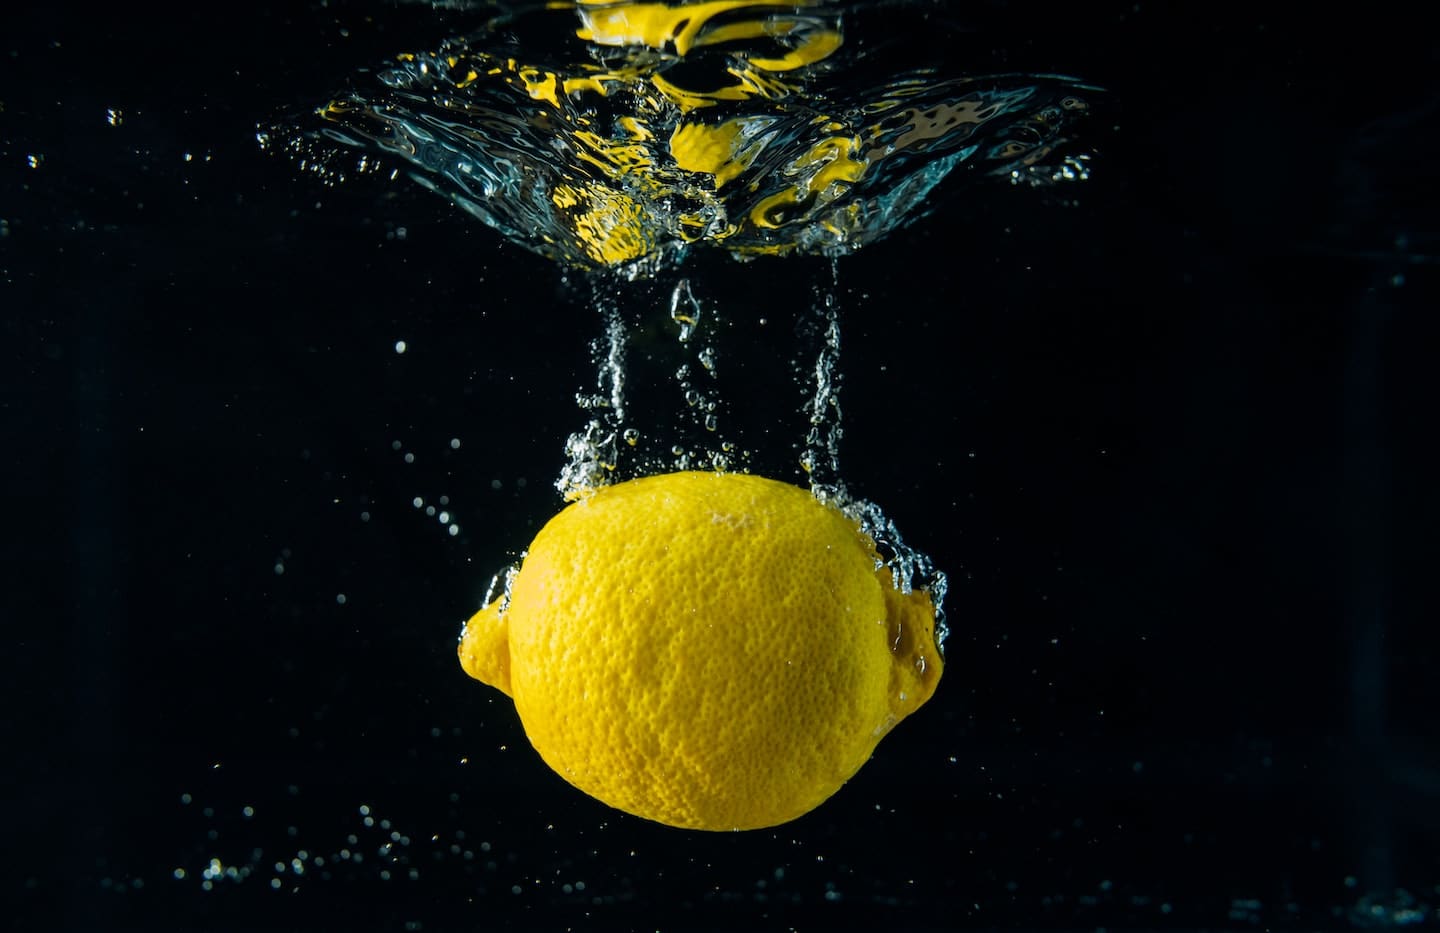 Lemon In Water To Represent The Strain Super Lemon Haze From Rootdown